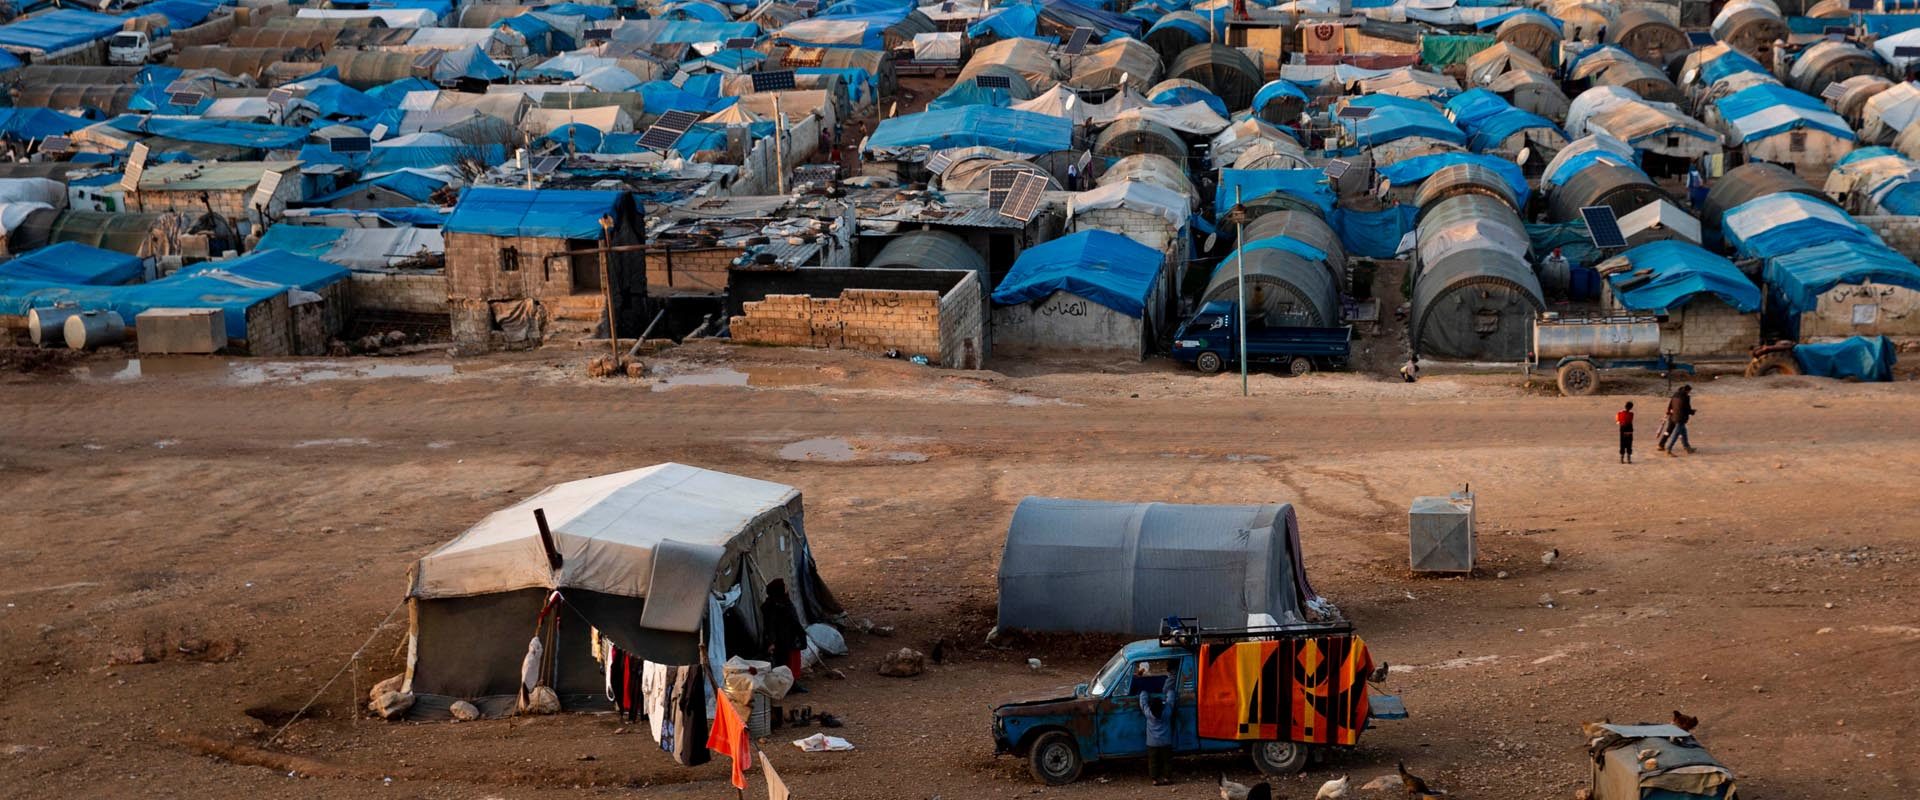 Syria / Atma Refugee Camp - January 2018